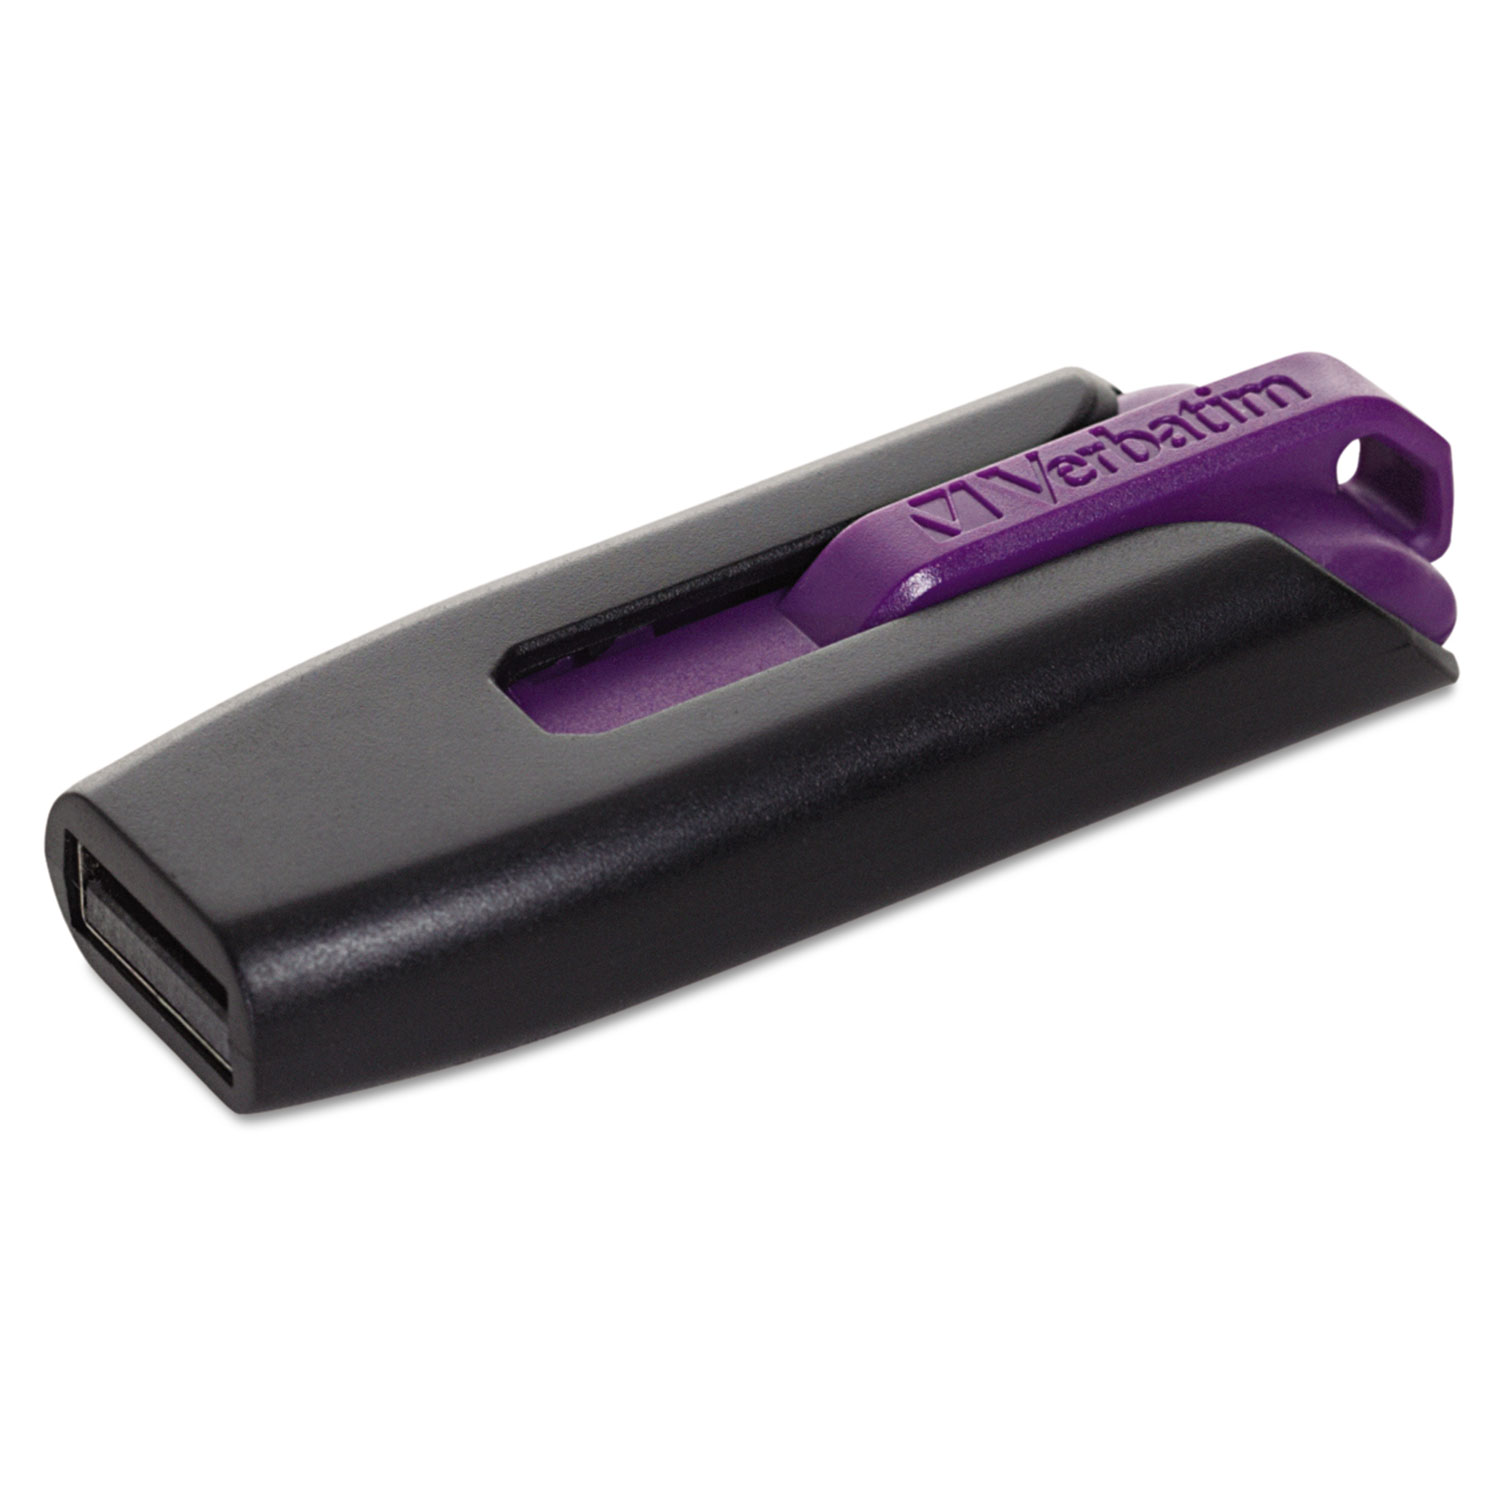 Store n Go V3 USB 3.0 Drive, 16GB, Black/Violet